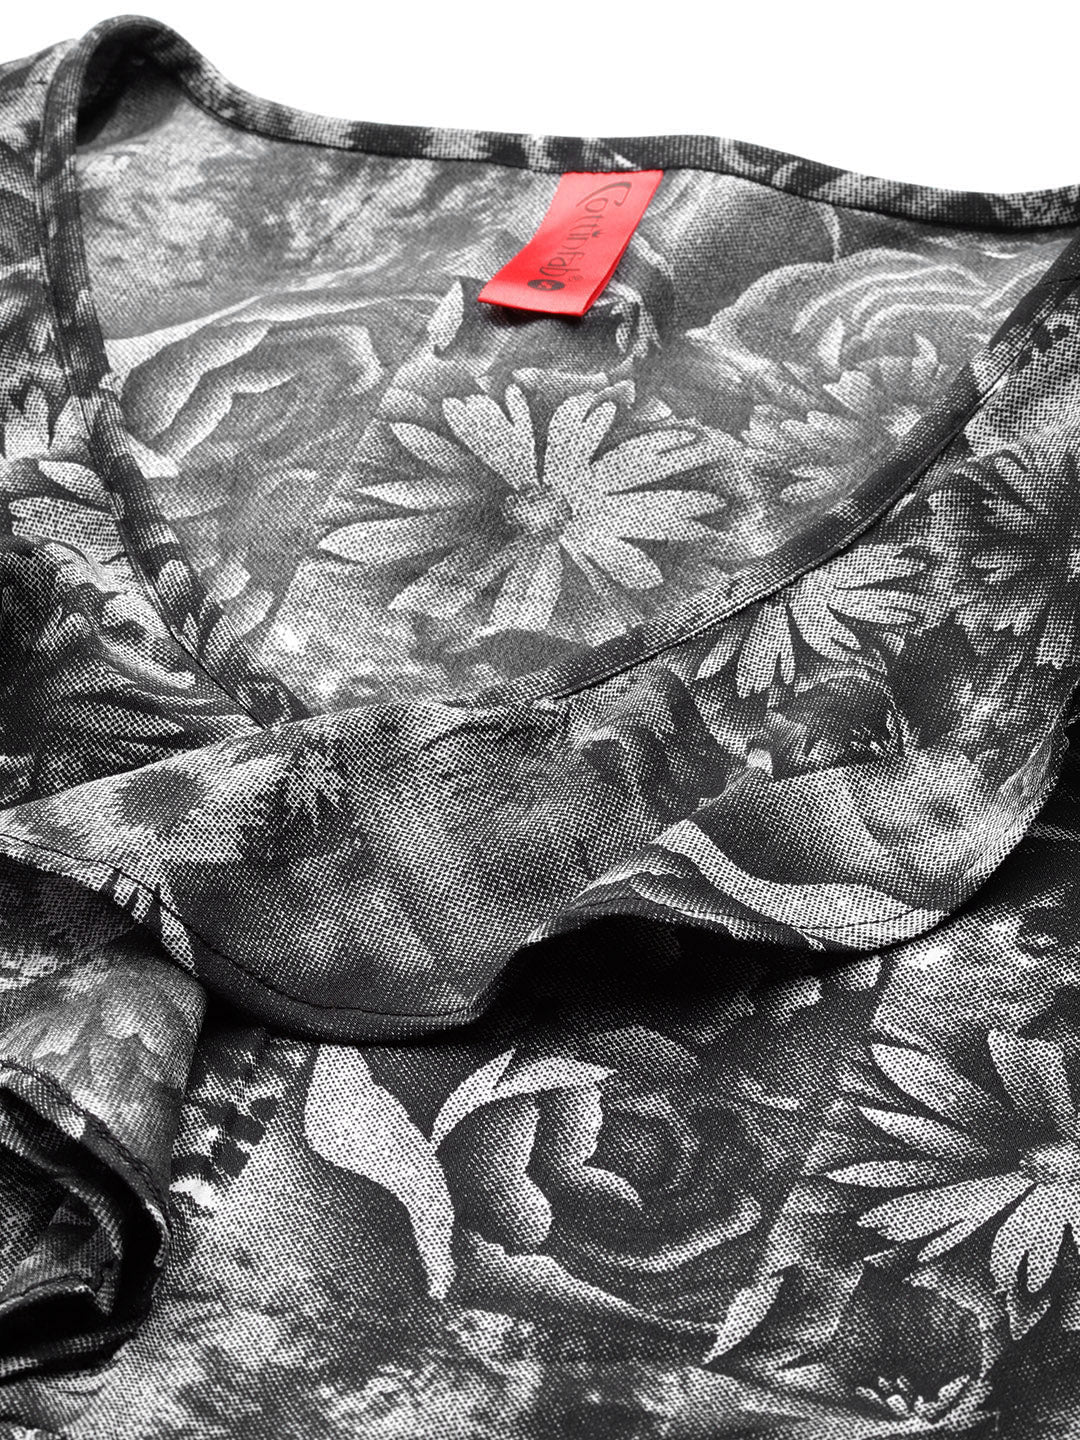 Cottinfab Women Floral Print Puff Sleeves Ruffled Crepe A-Line Midi Dress